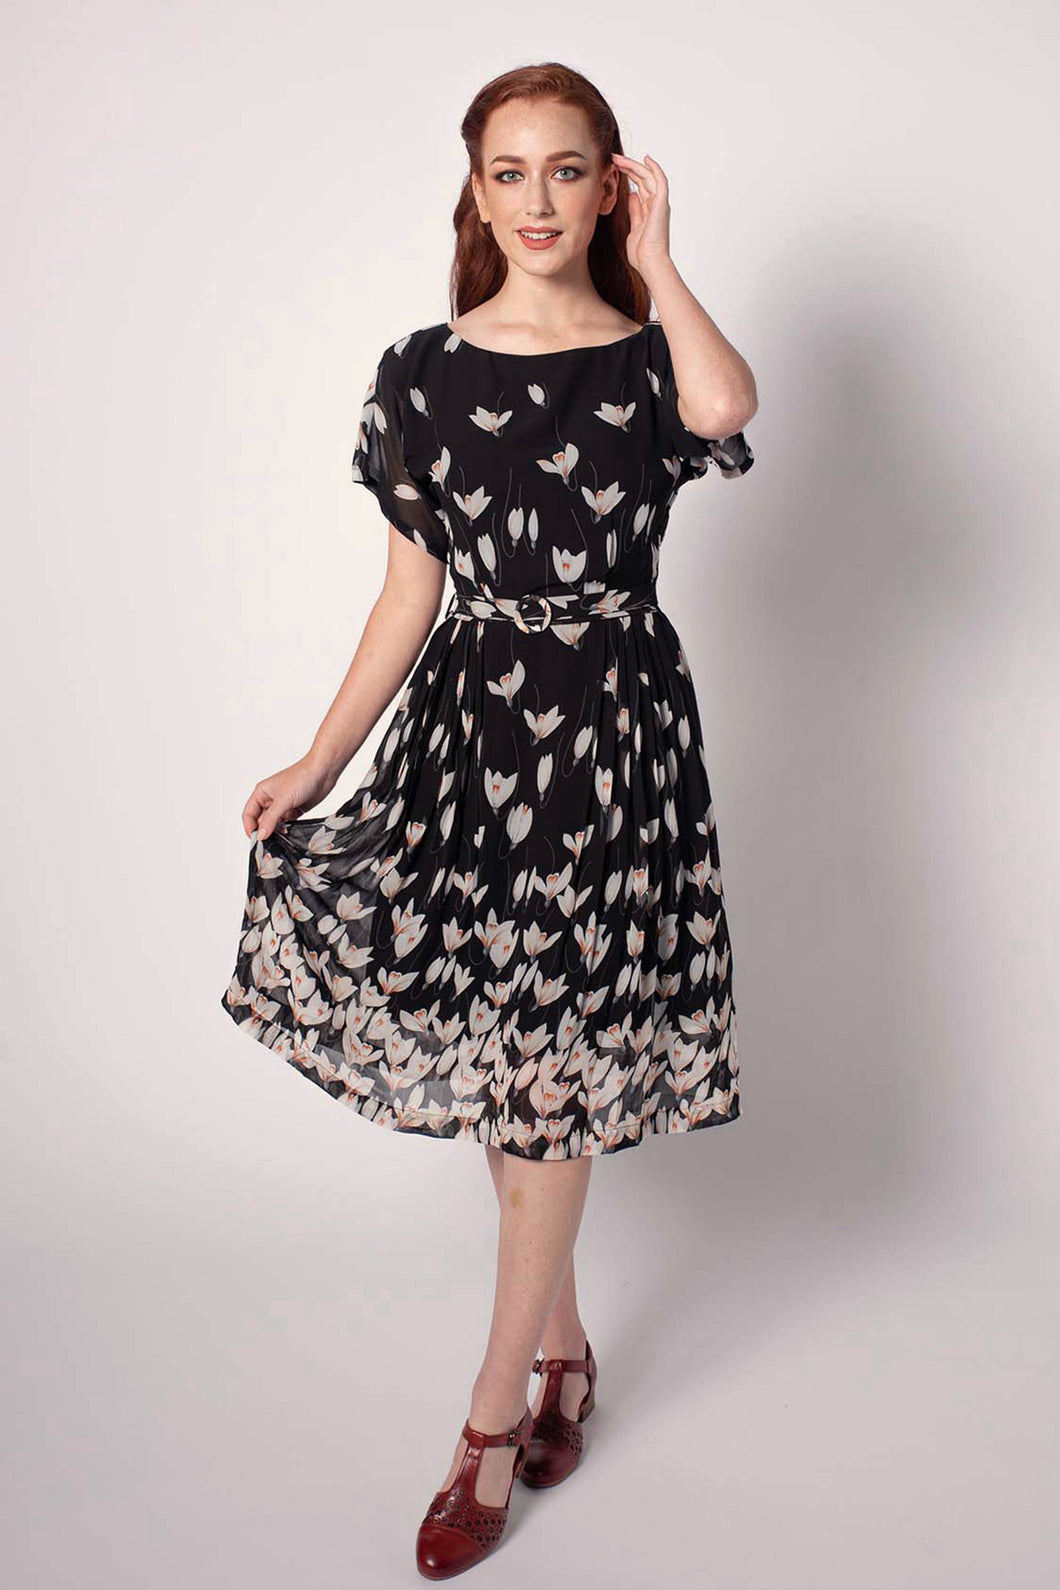 Freida Bell Floral Dress